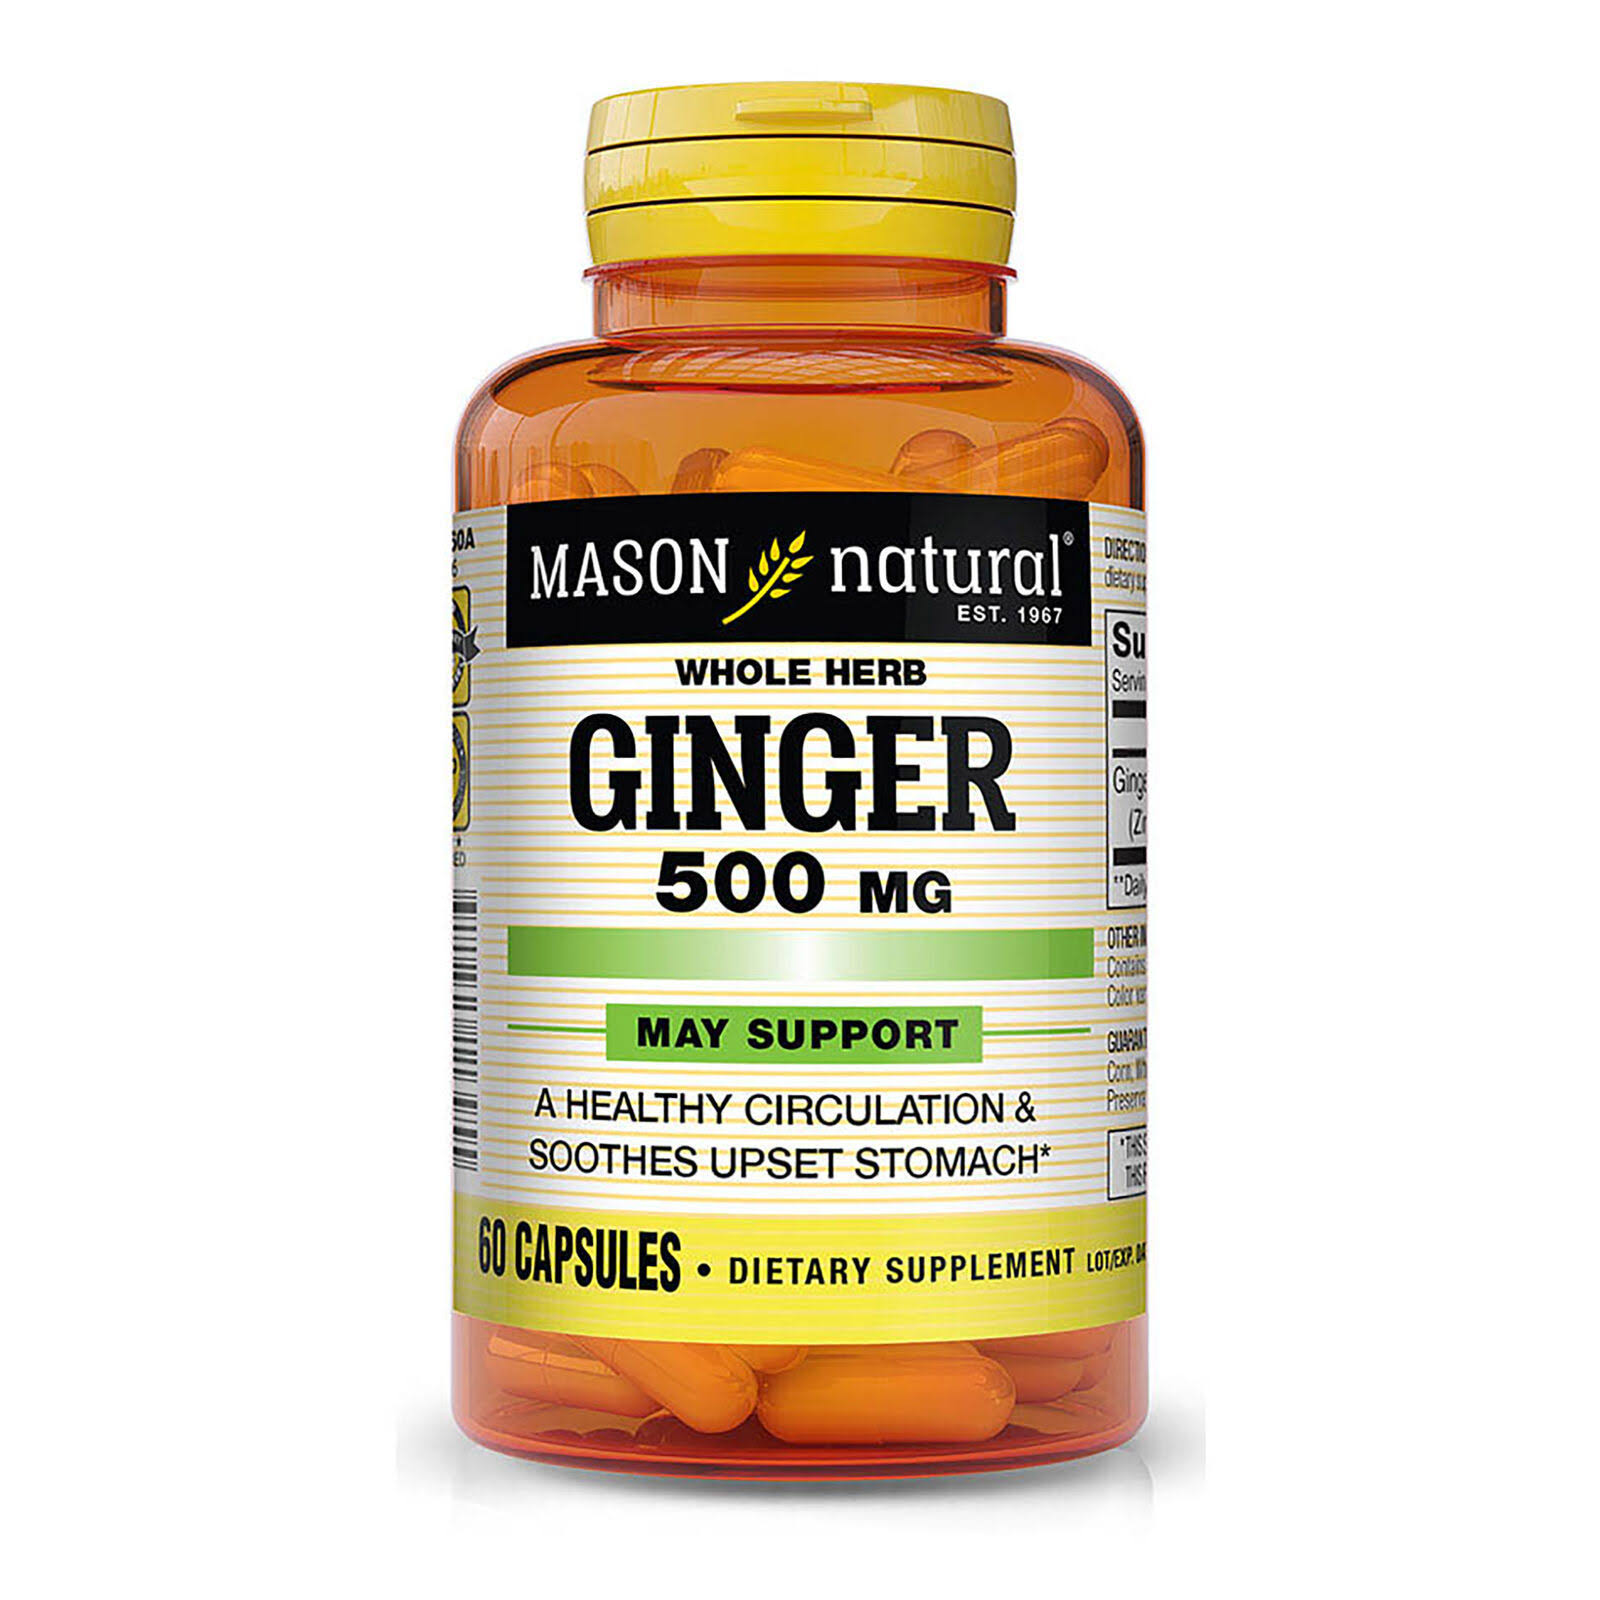 Mason Ginger 500mg Capsules - x60